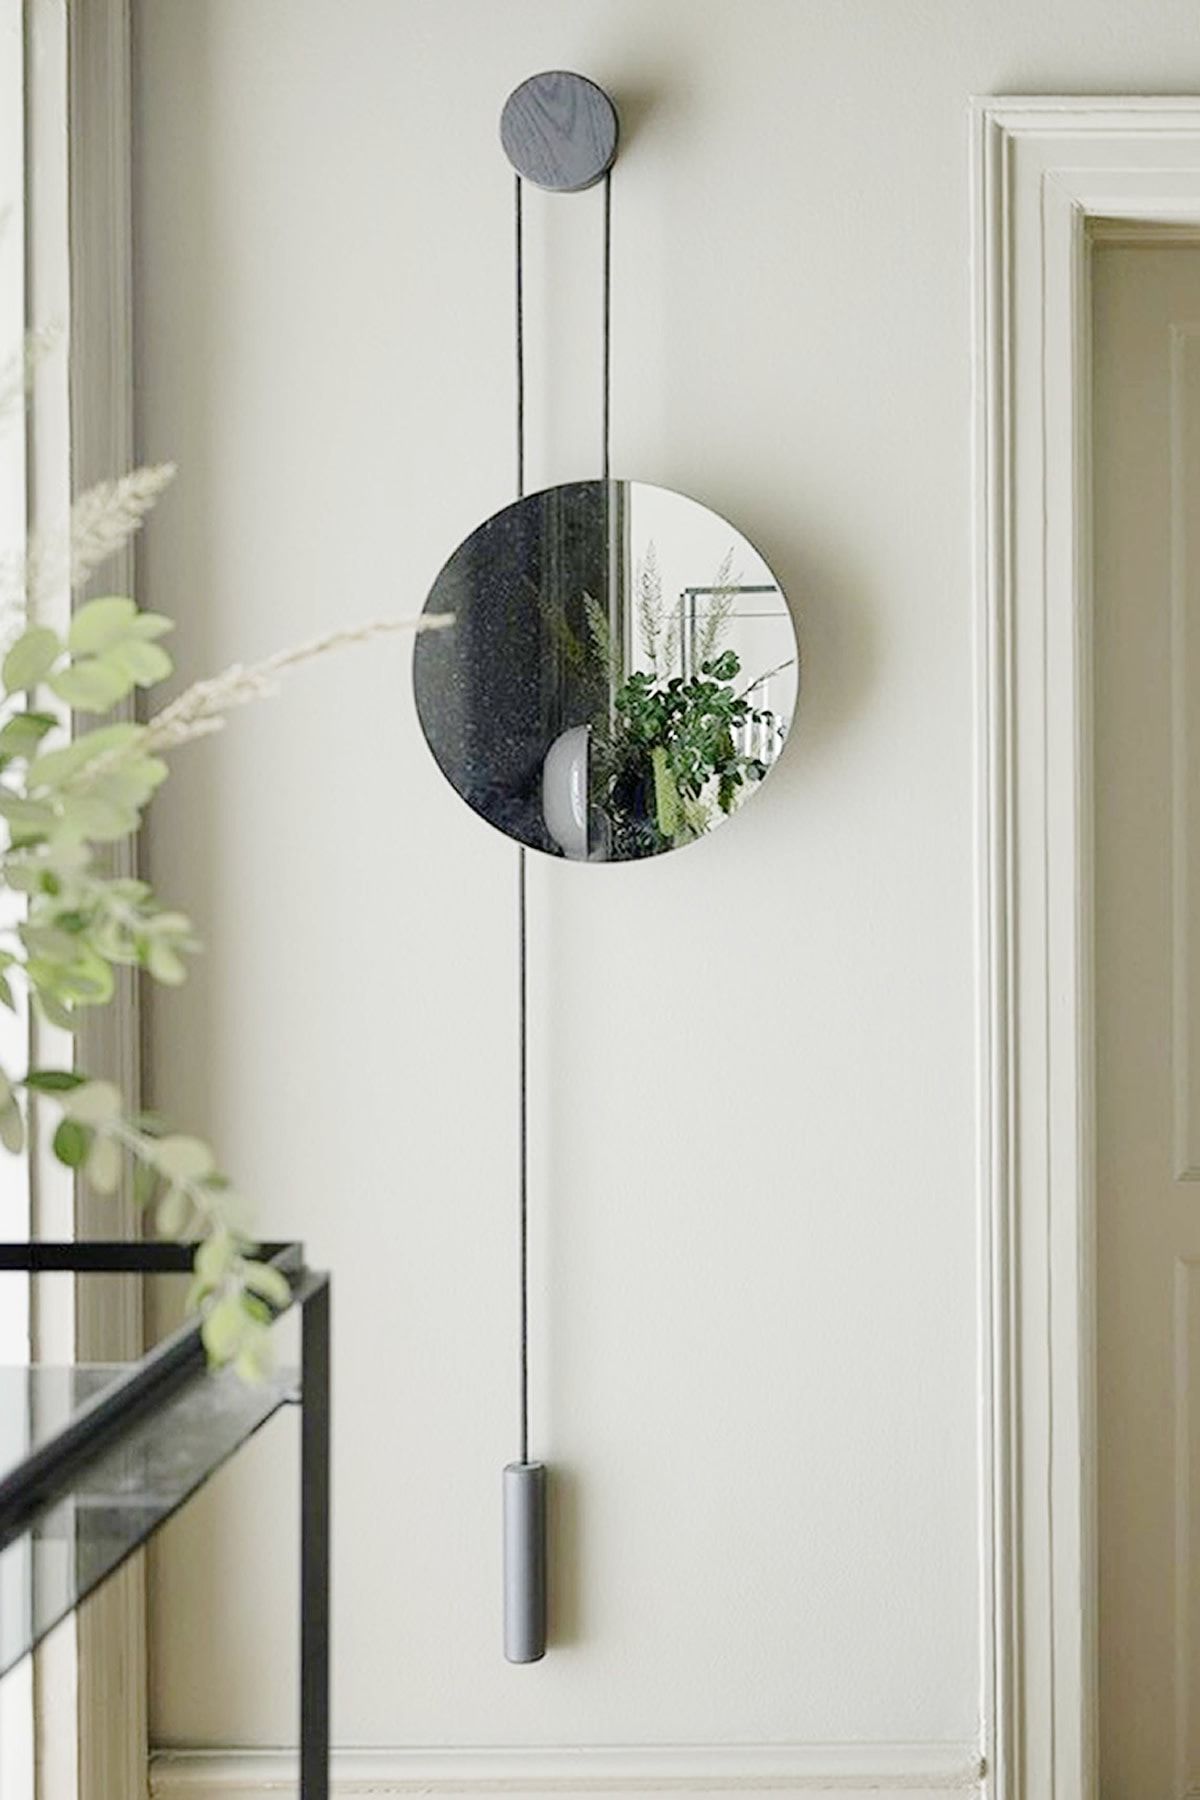 MetaQuartz Aksesuar Pendulum Ayna, Dekoratif Duvar Aynası, Siyah